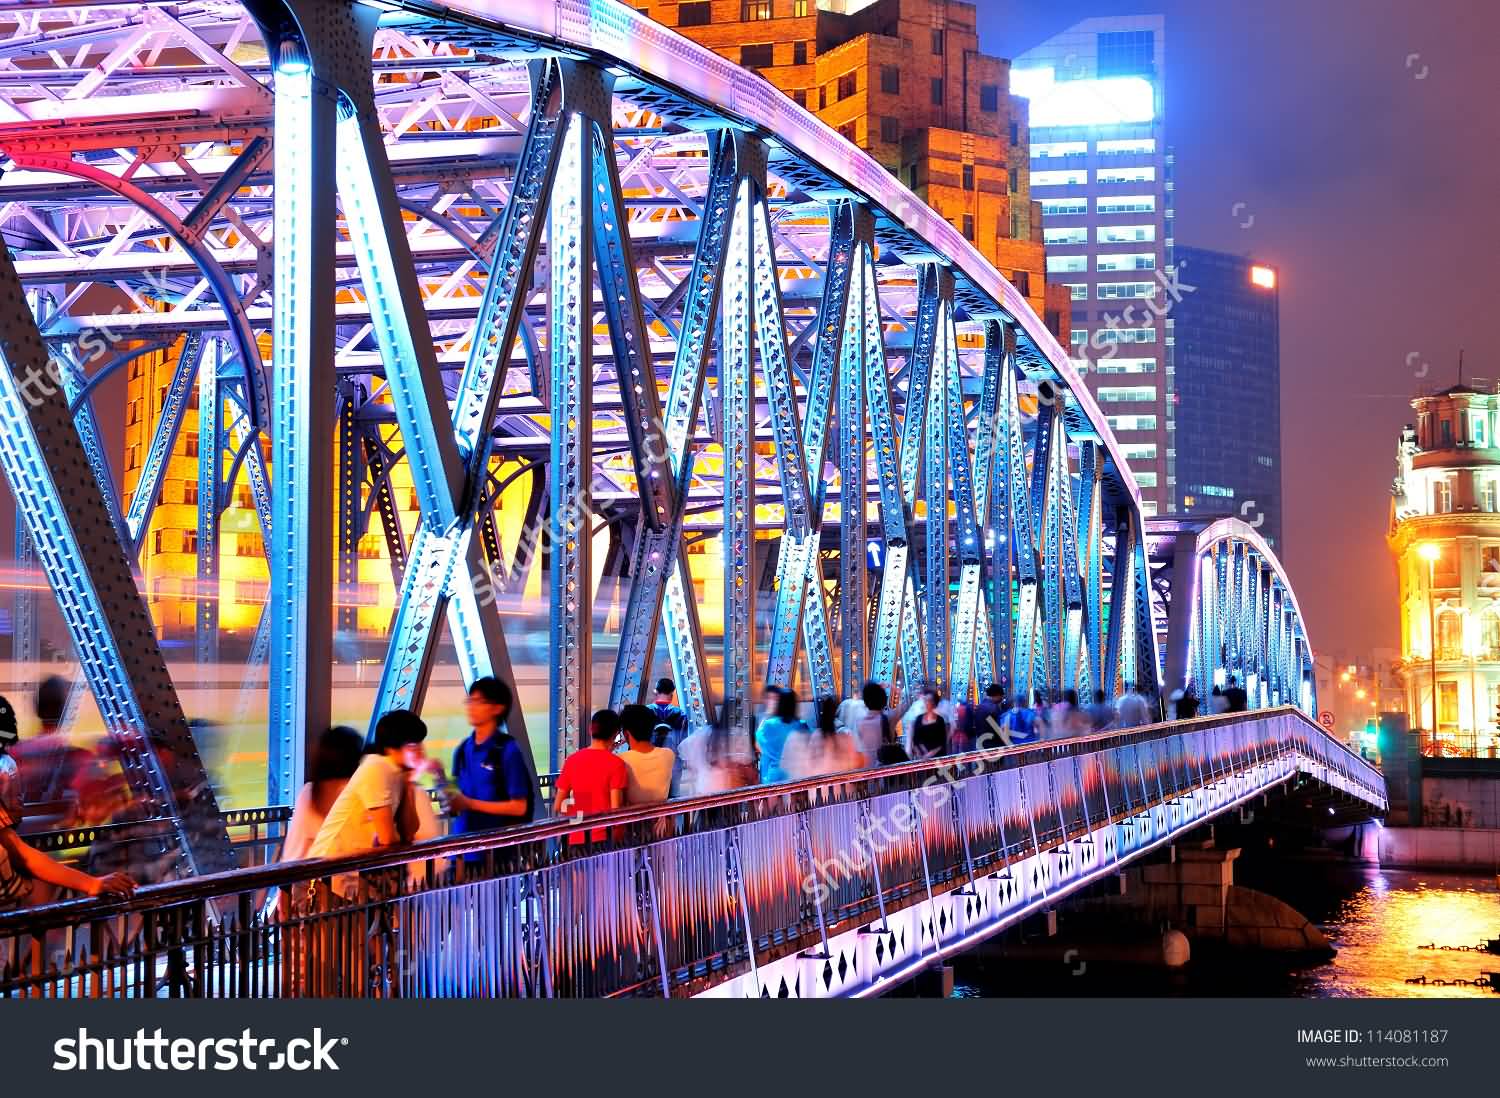 Waibaidu Bridge At Night With Colorful Lights